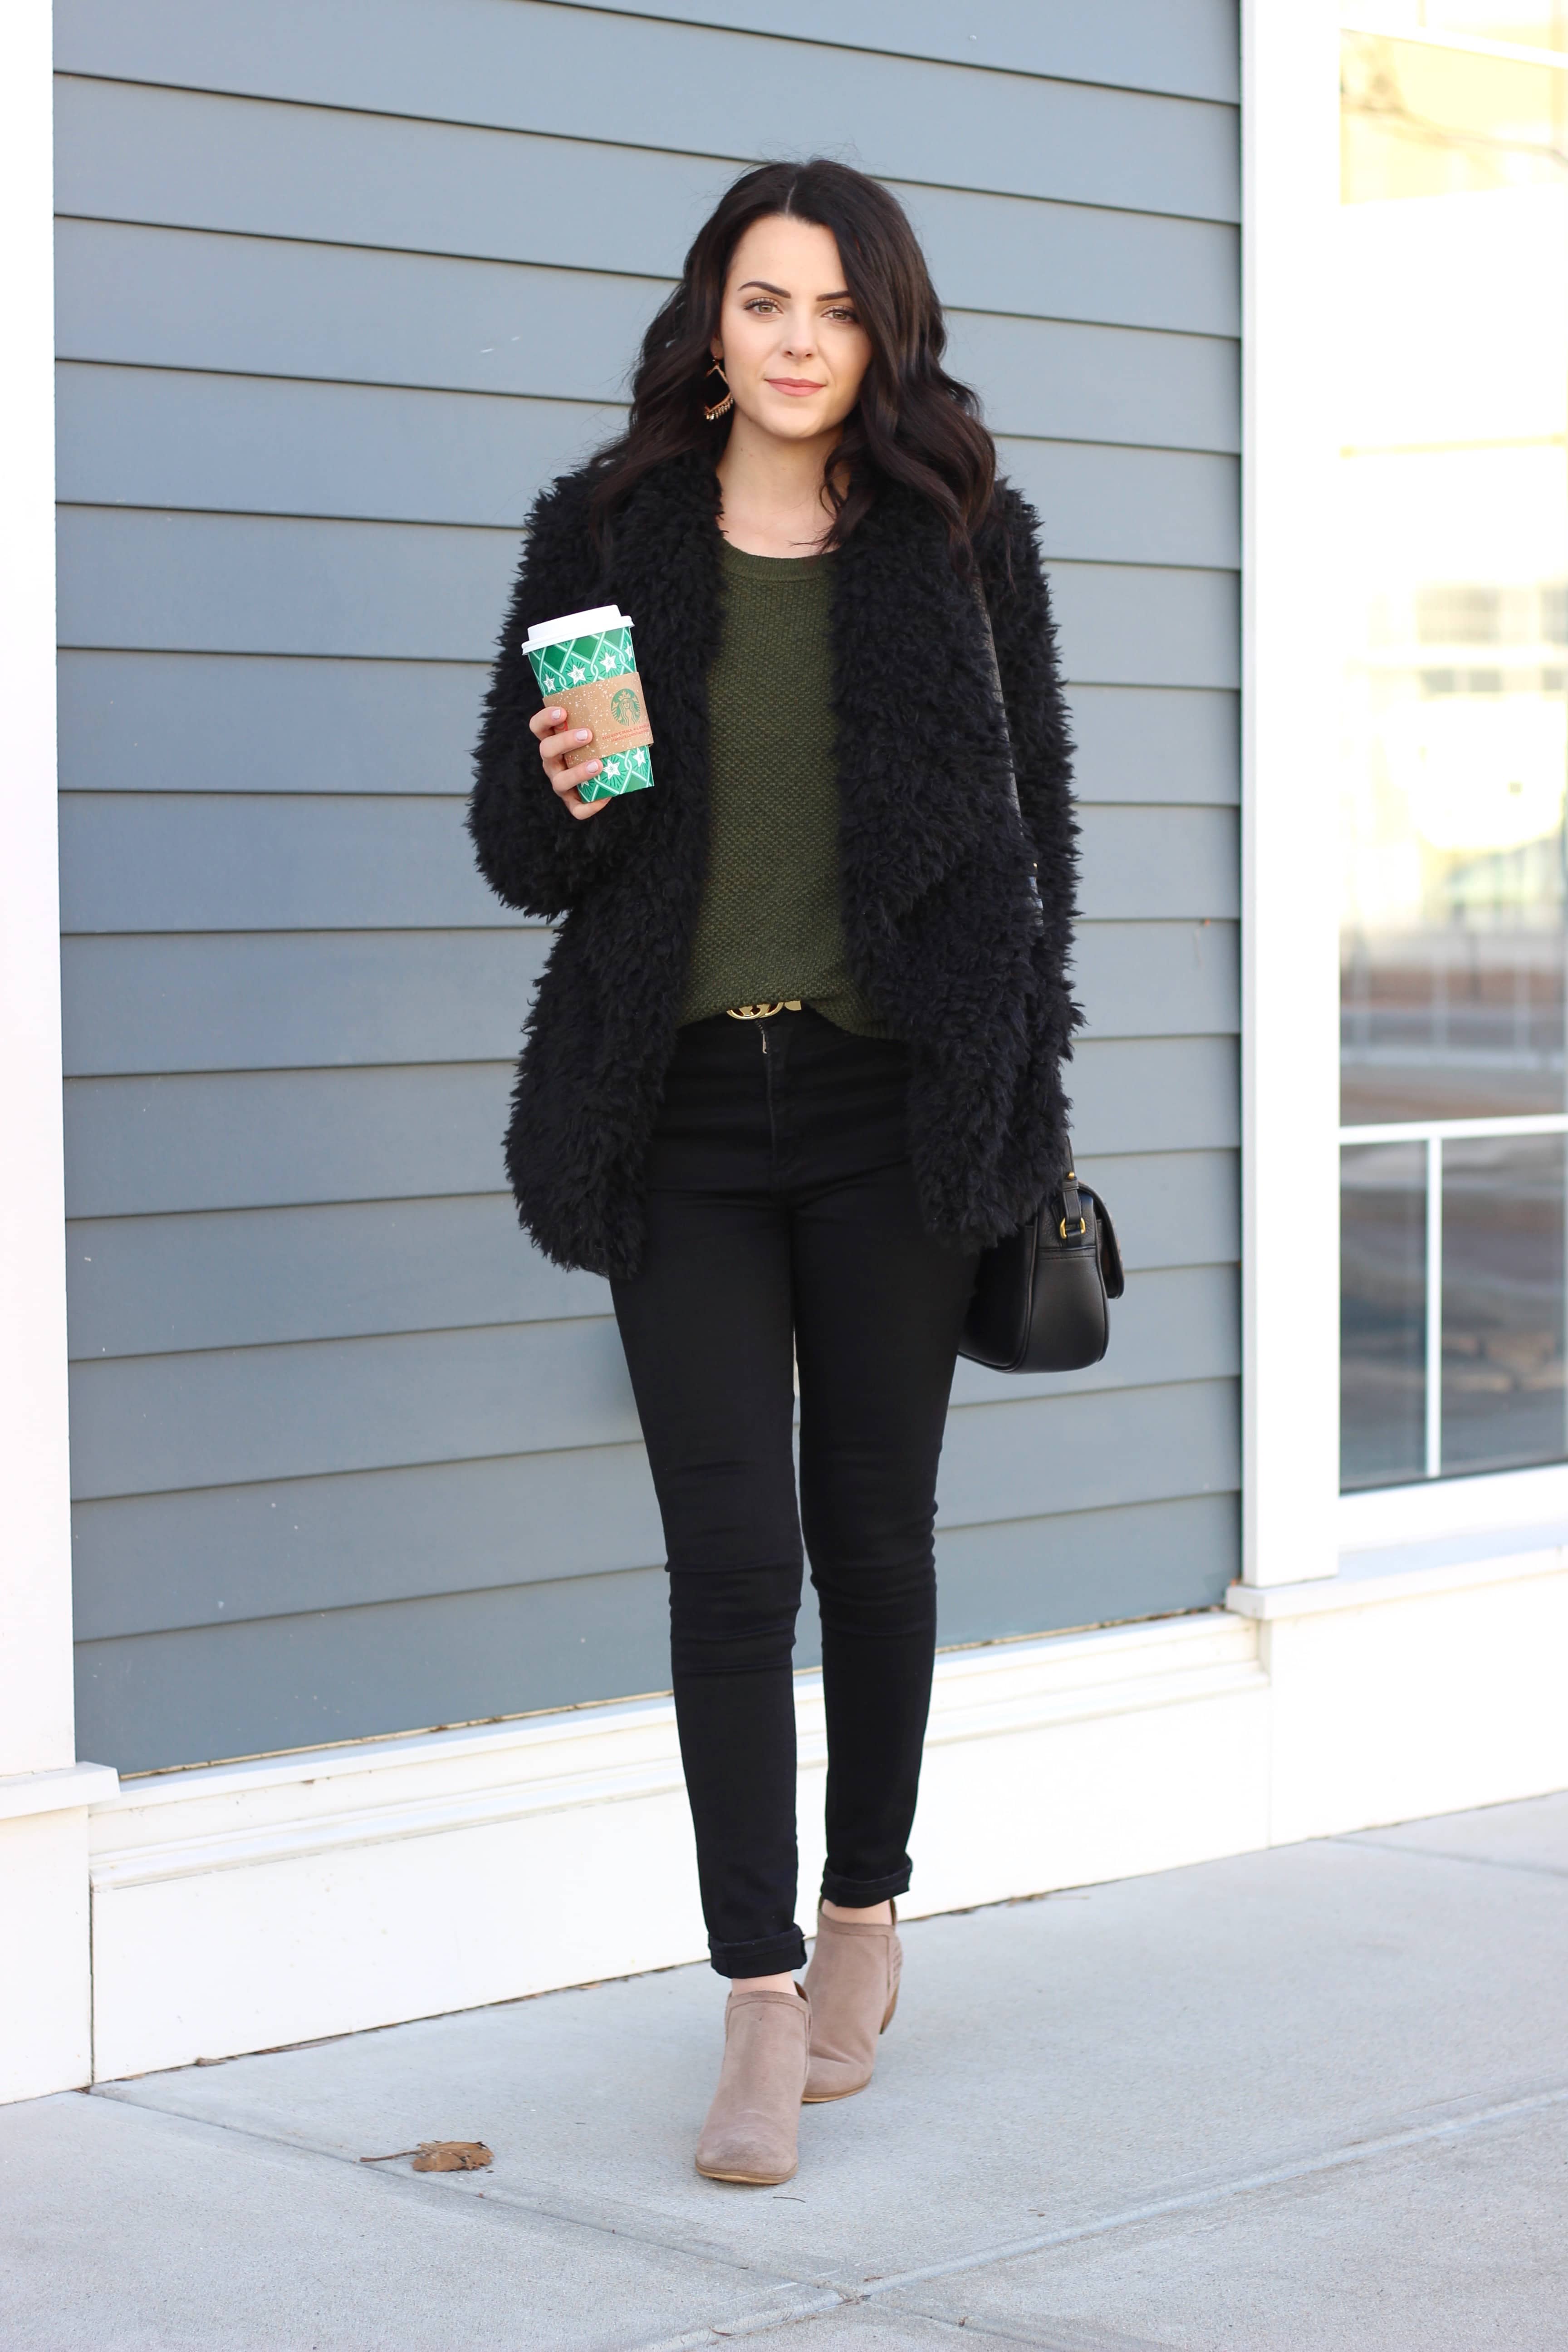 Black Jeans + Olive Sweater : OOTD